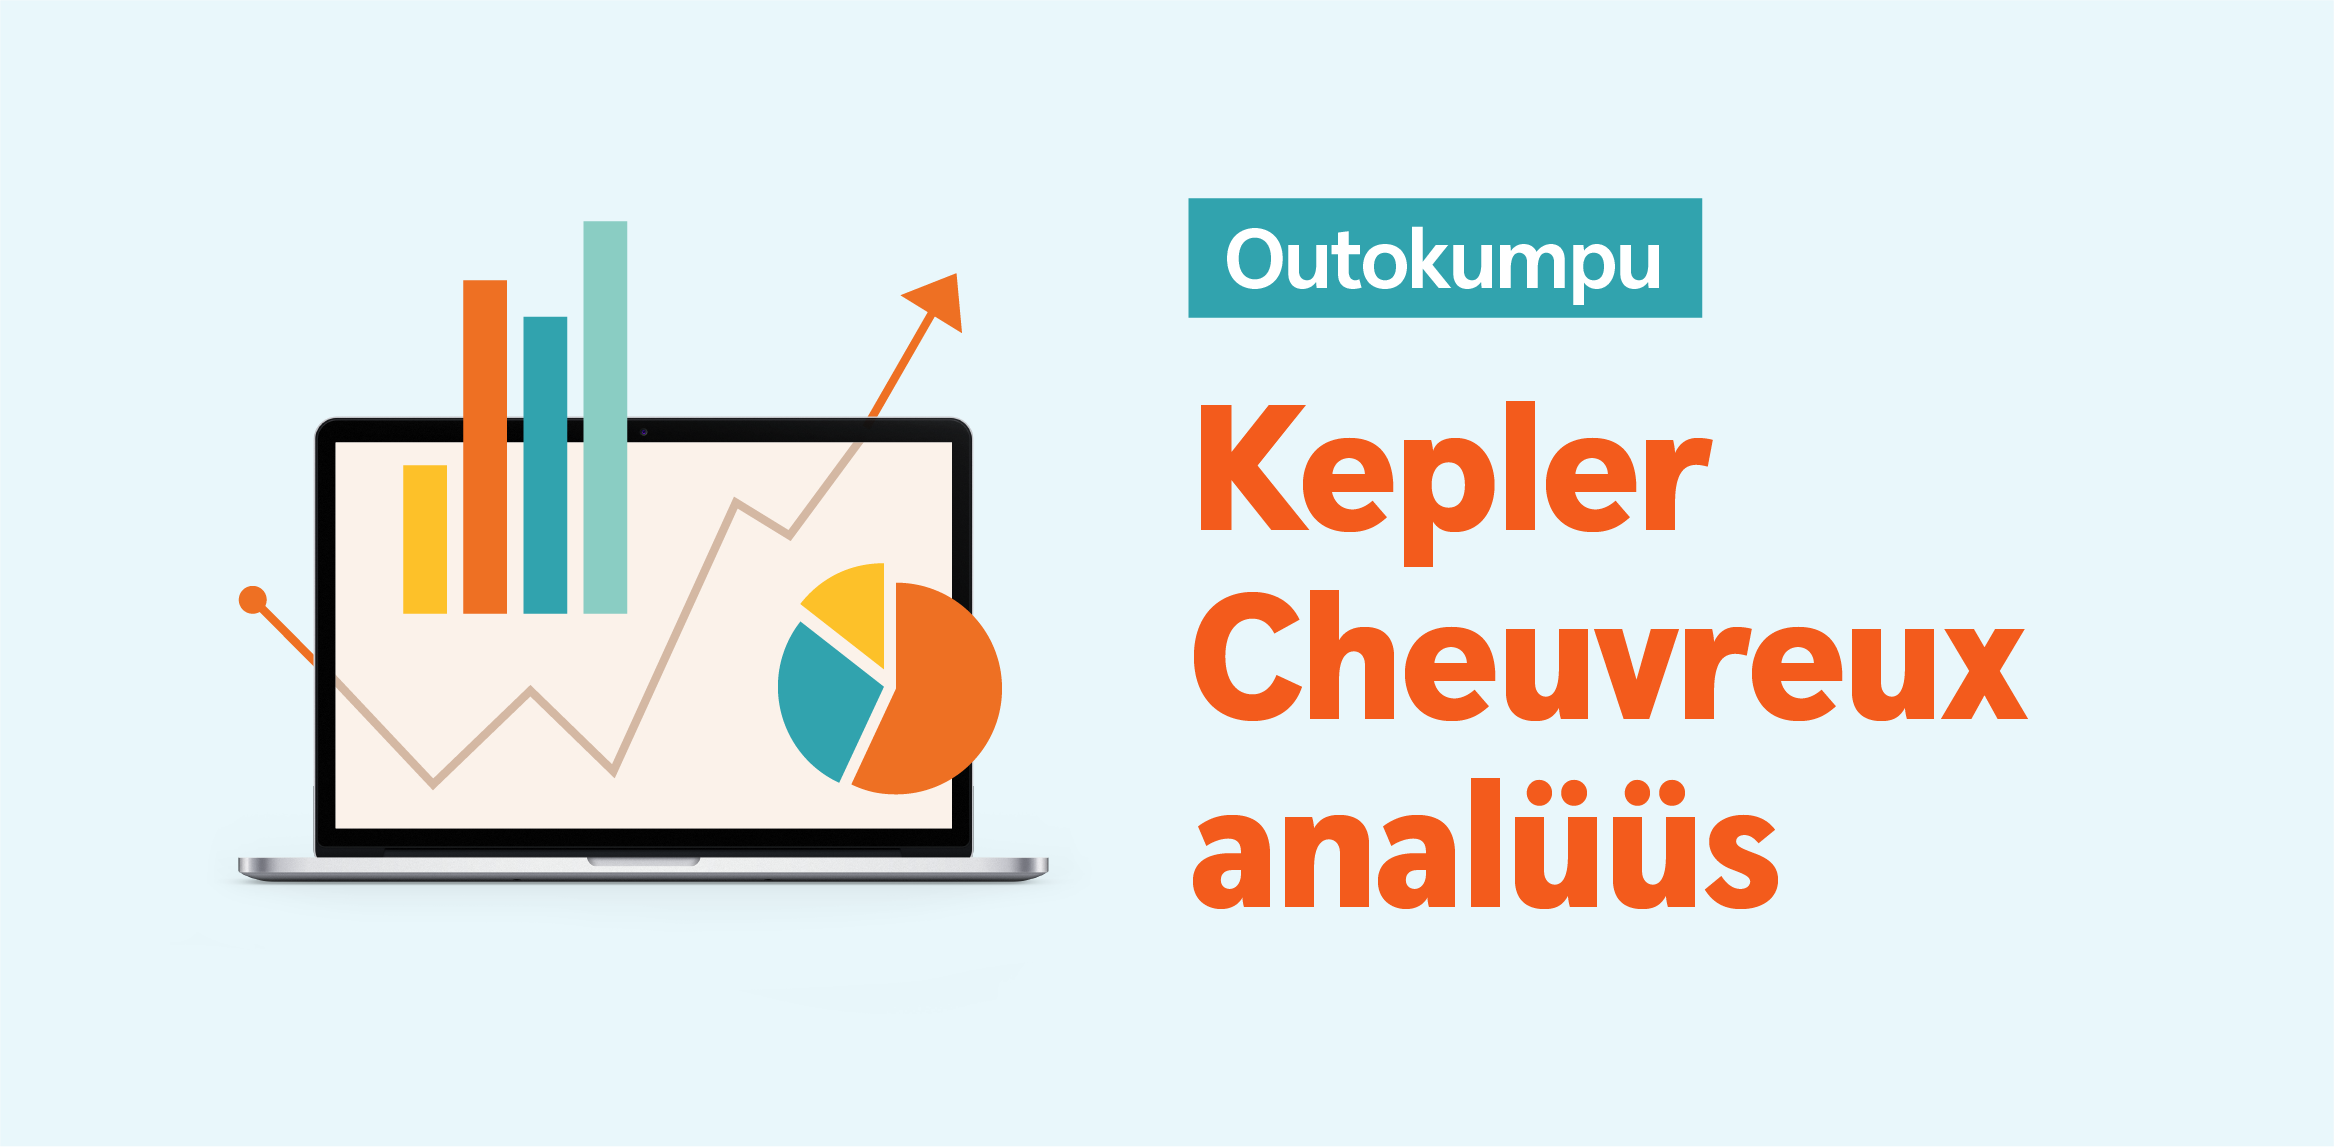 Kepler Cheuvreux tõstis Outokumpu aktsia hinnasihti